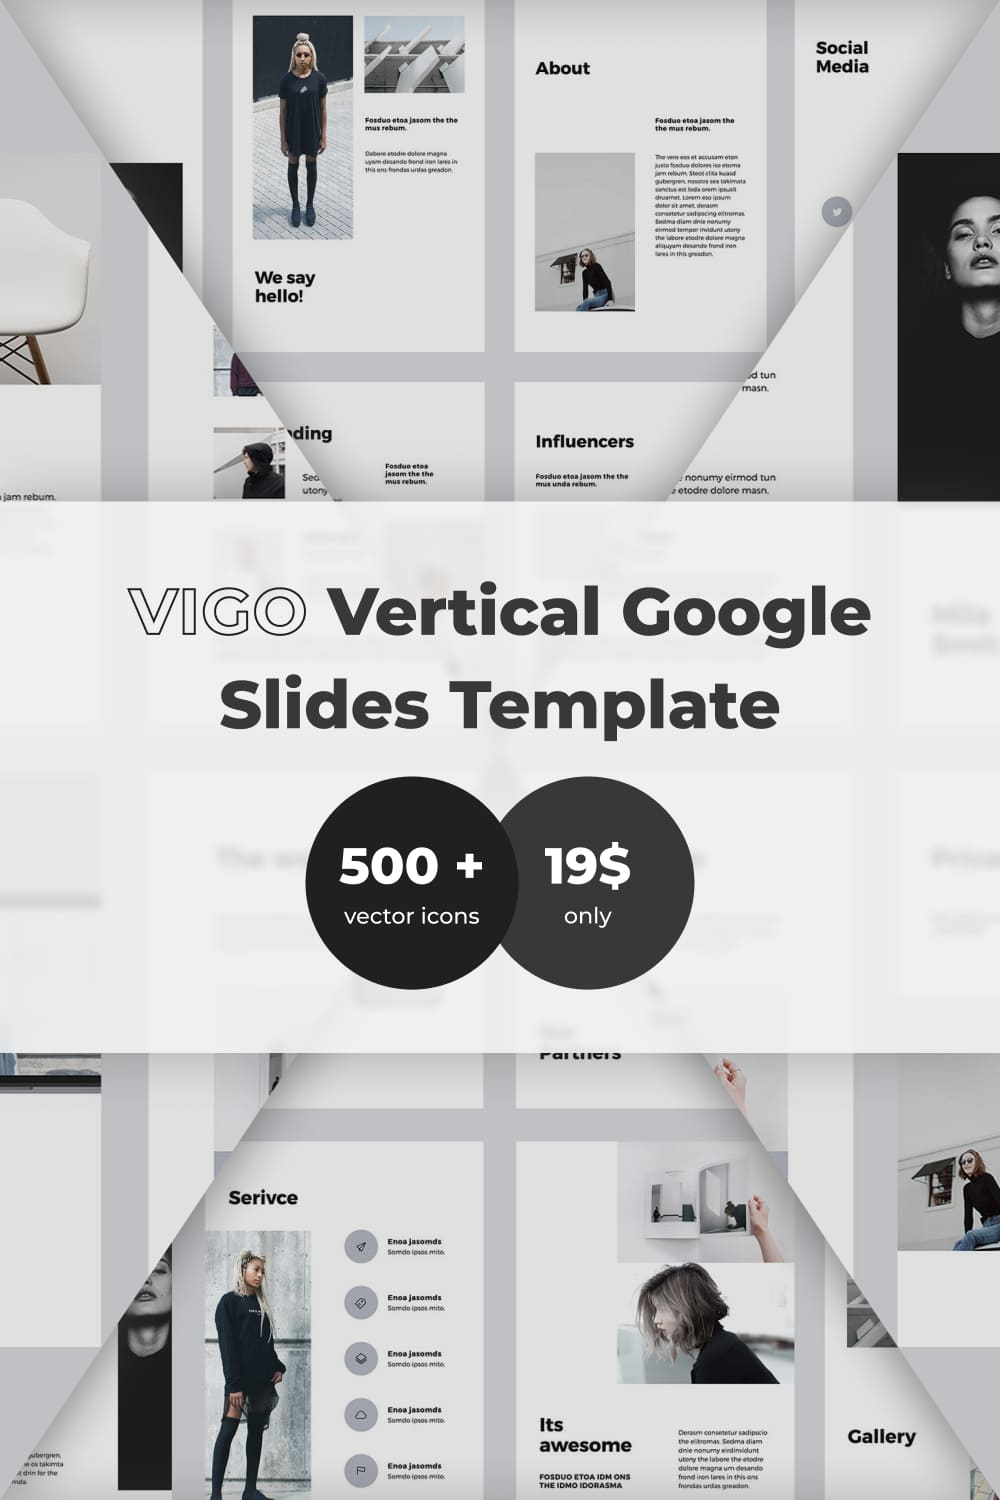 VIGO Vertical Google Slides Template by MasterBundles Pinterest Collage Image.